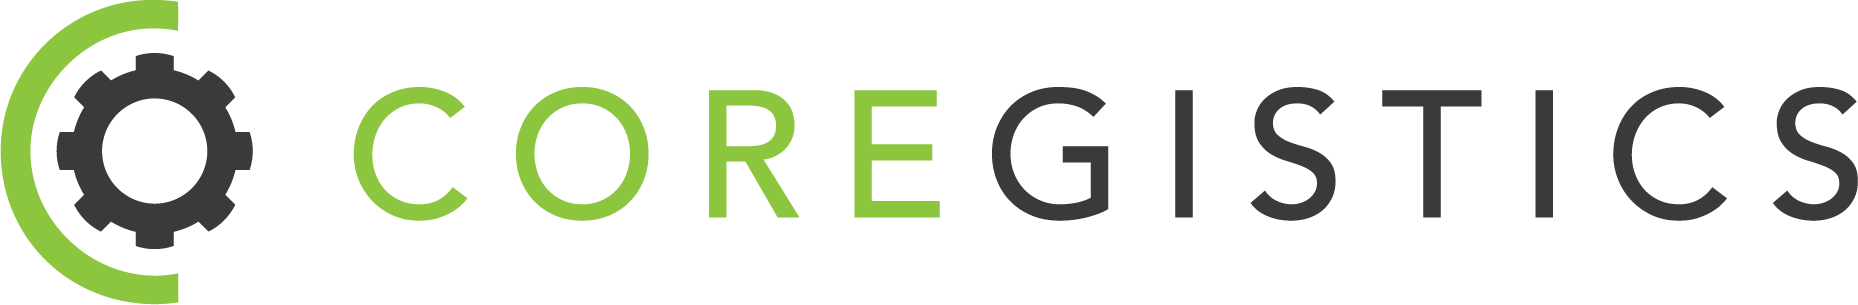 Coregistics Company Logo